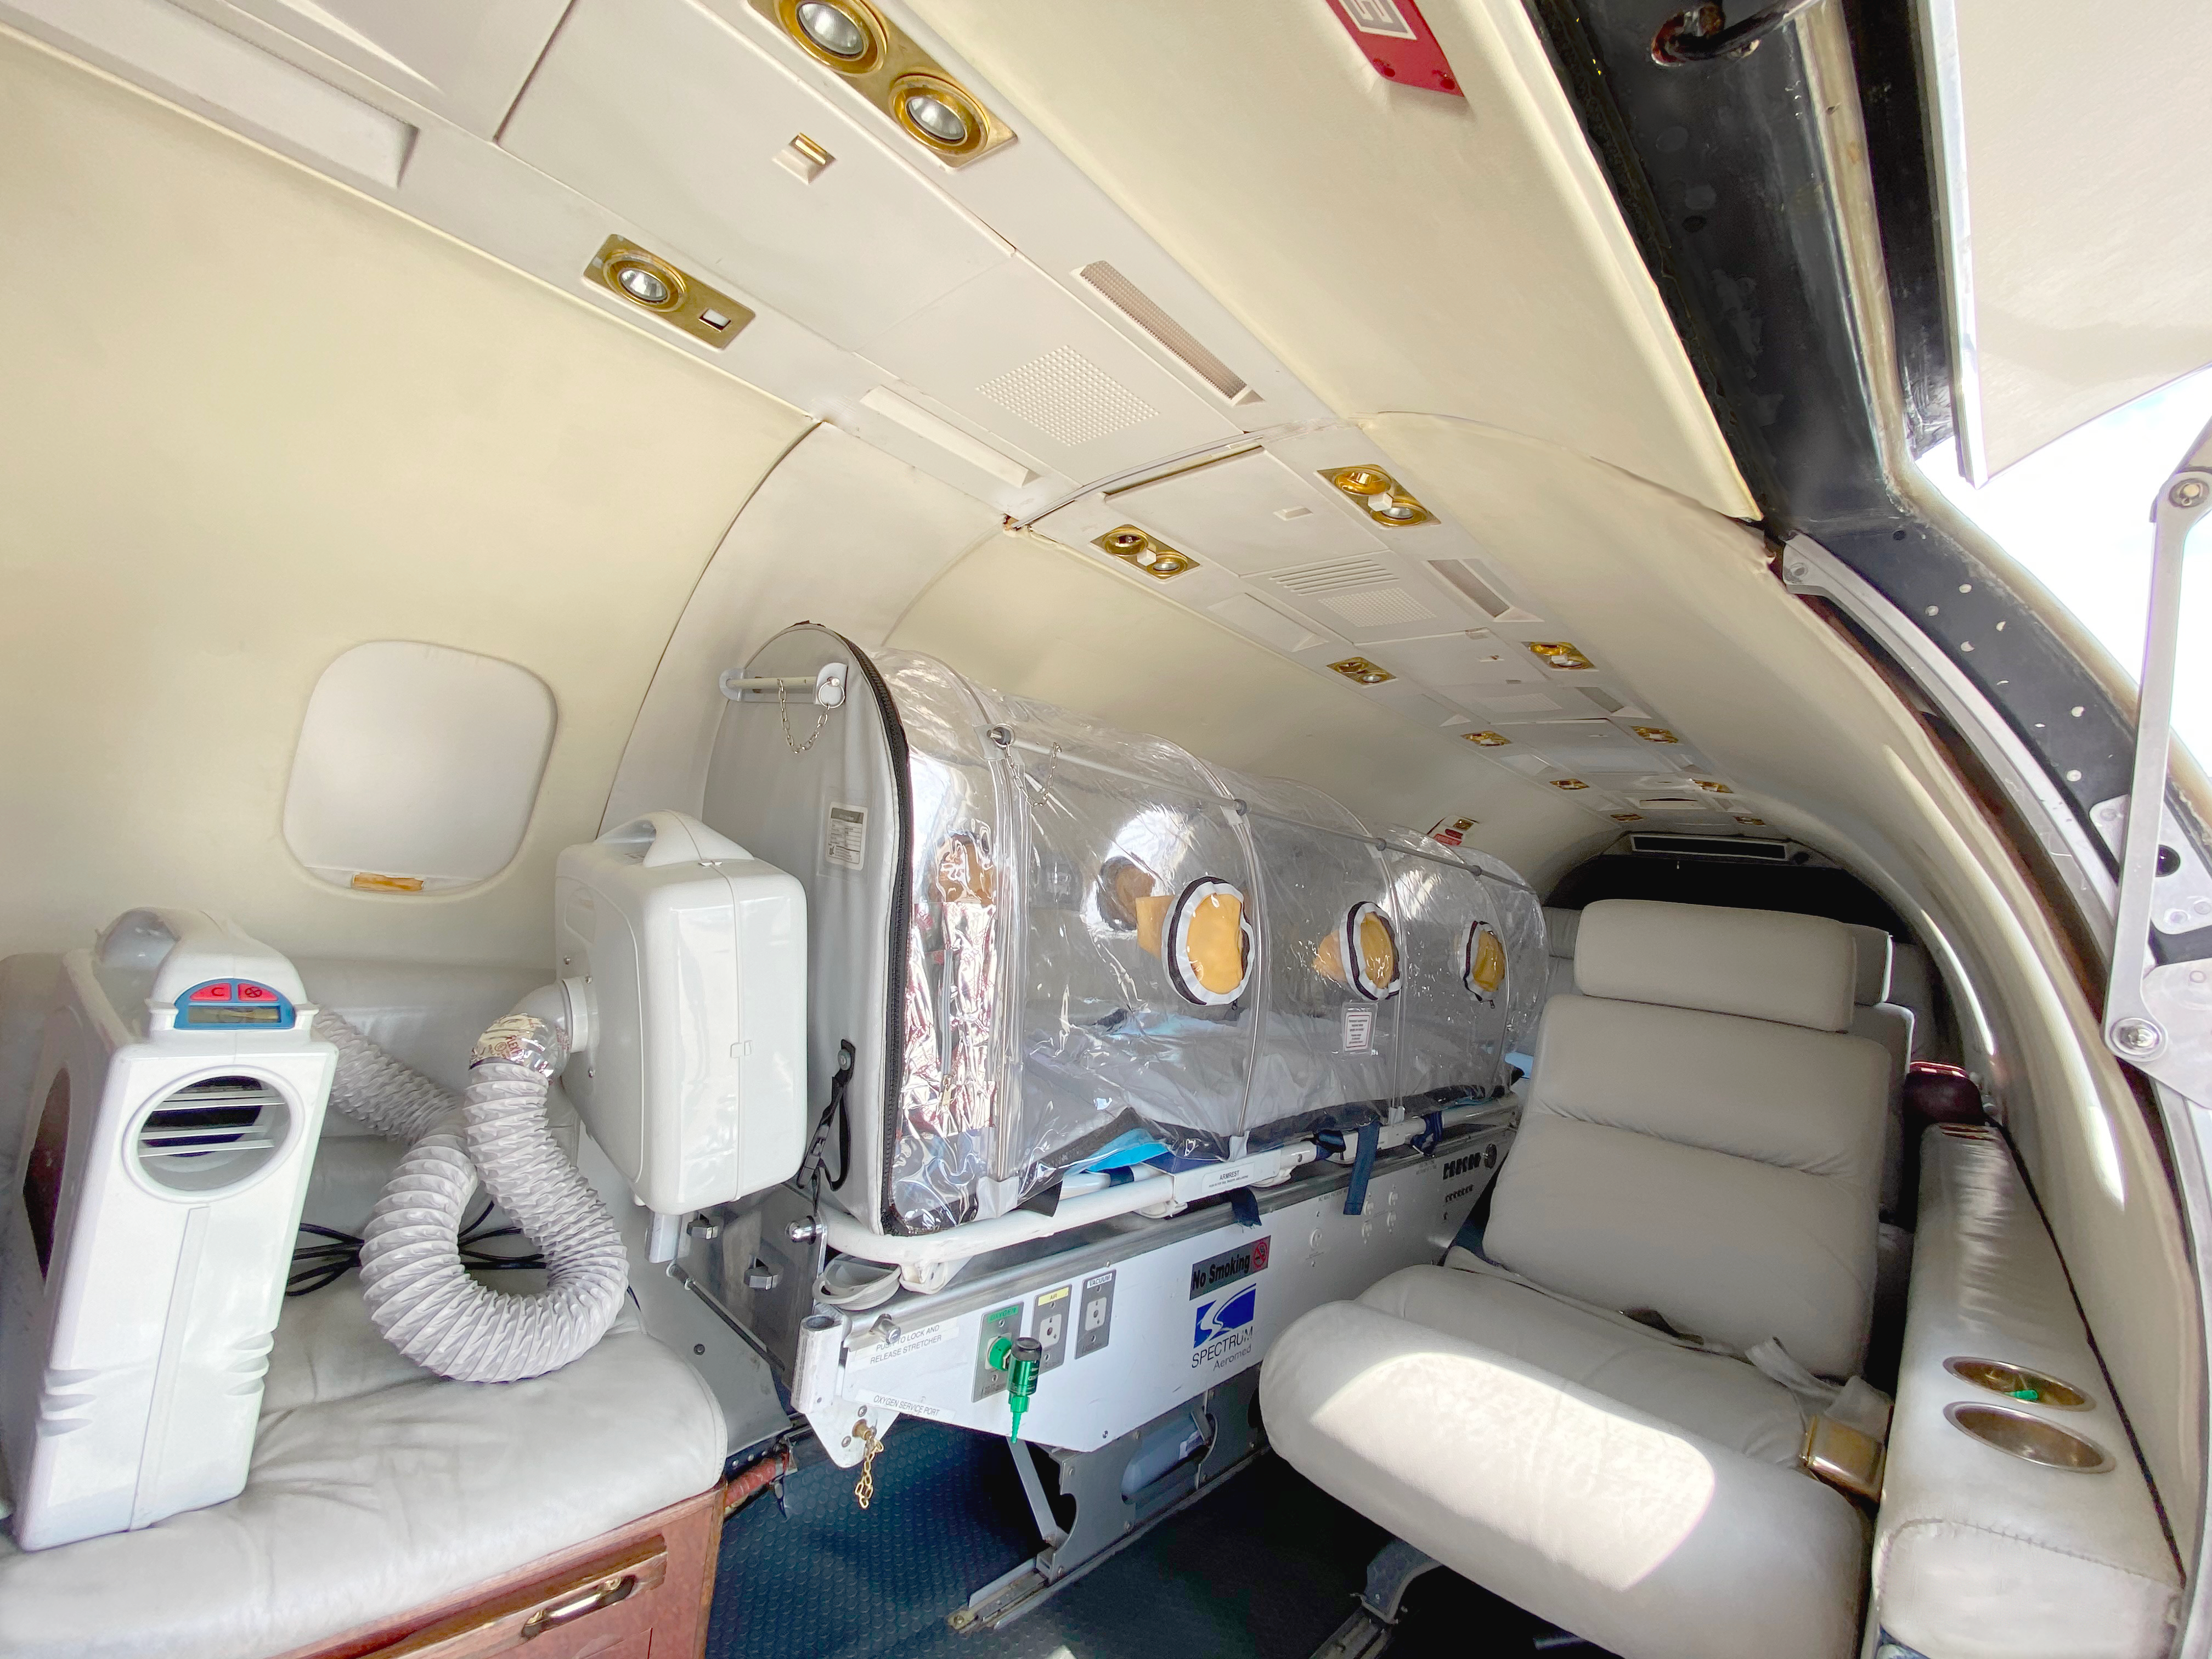 Isolation chamber aboard an Aeromedevac Medical Jet